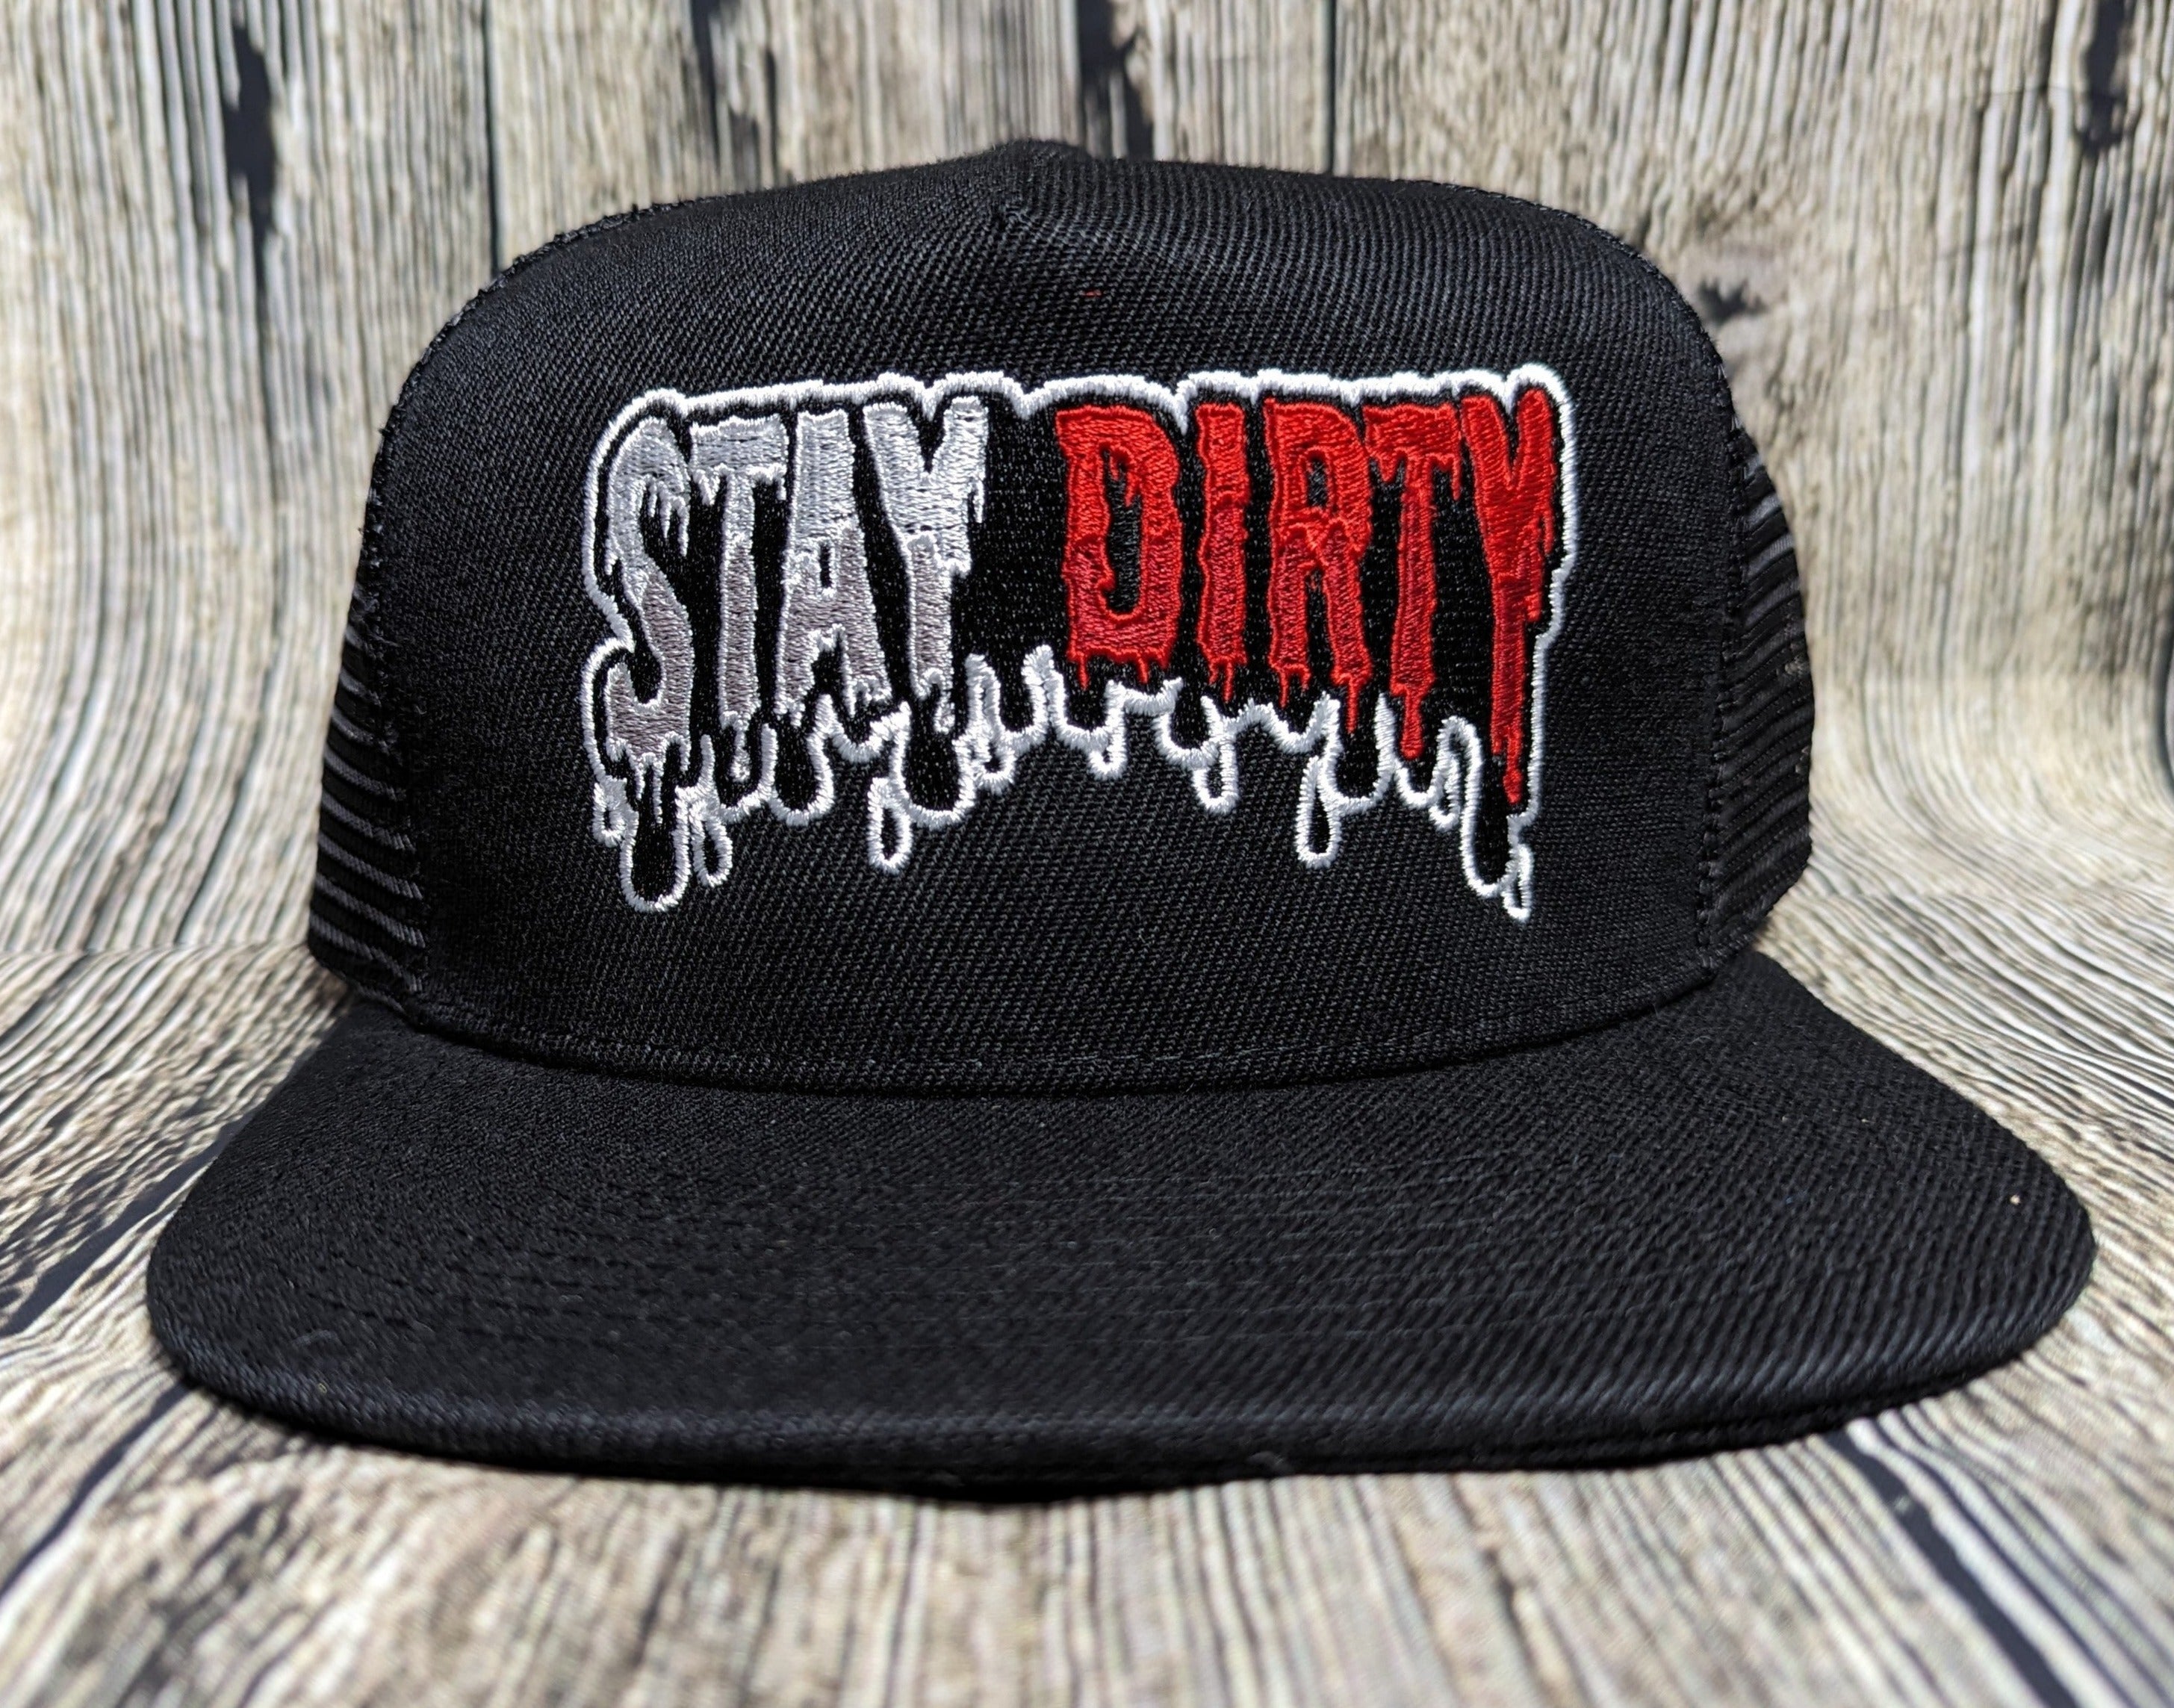 Stay Dirty Drip - Snapback Hat